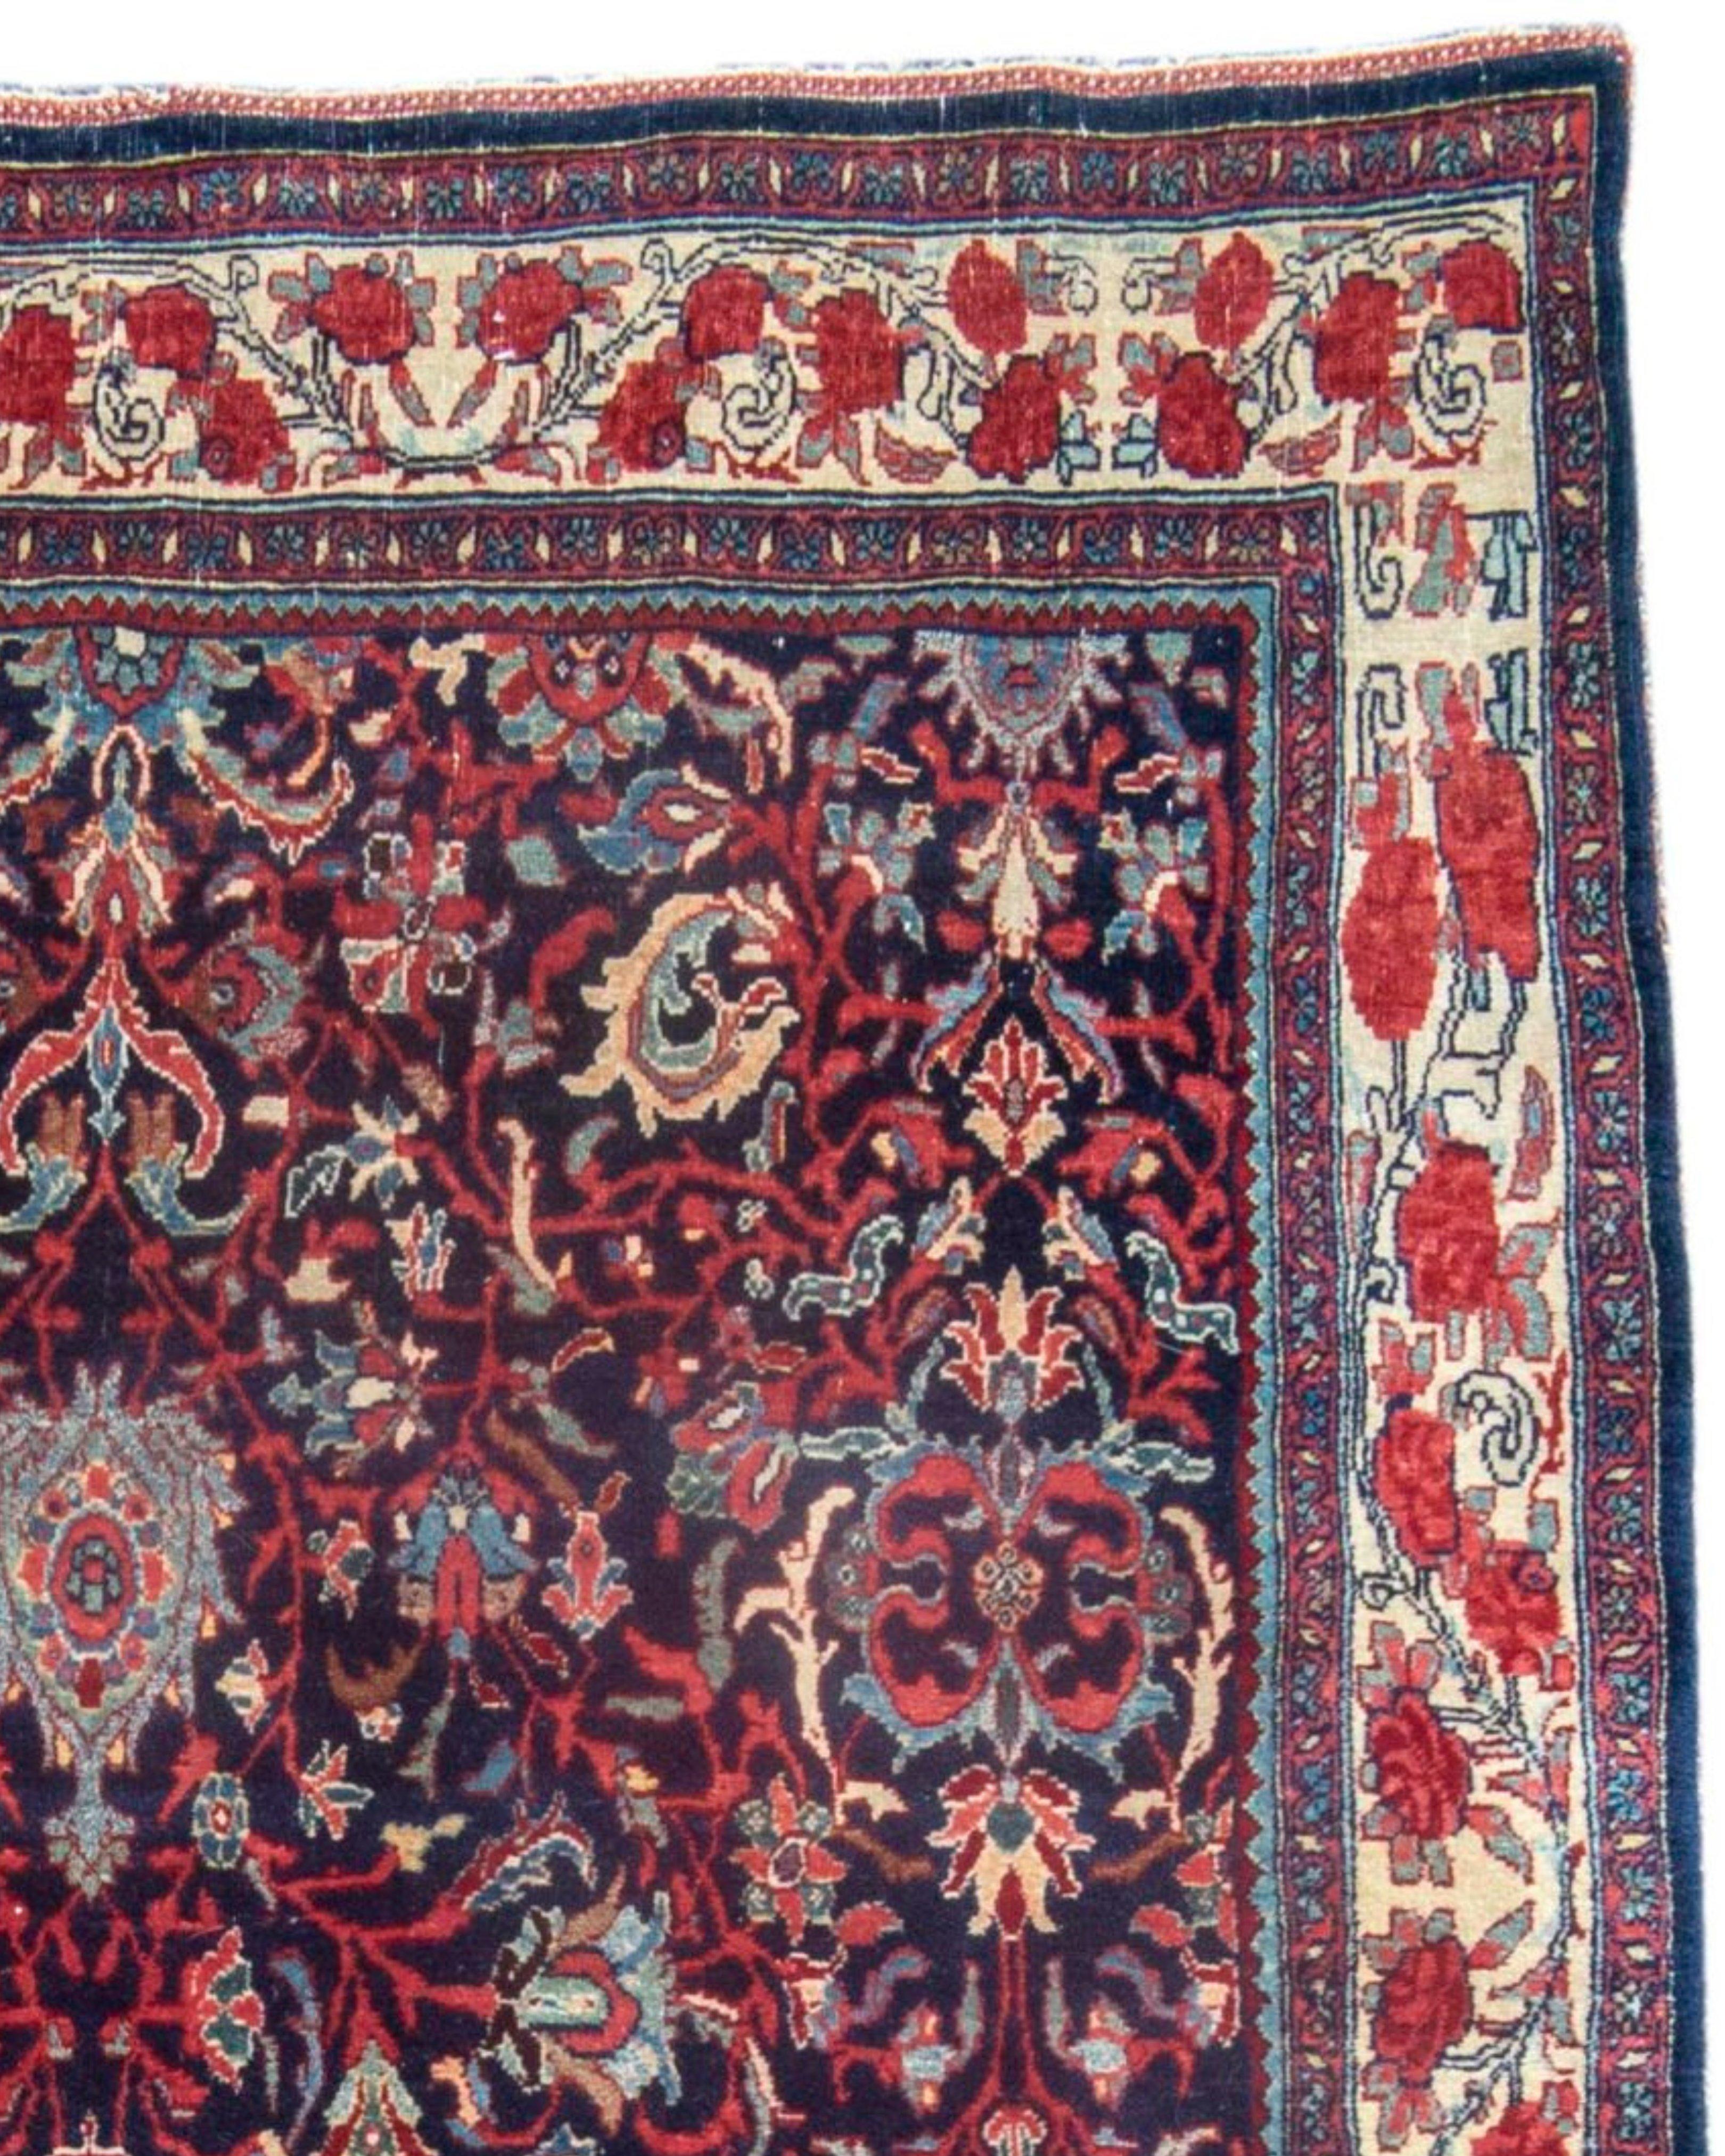 Antique Persian Bidjar Rug, Early 20th Century

Additional Information
Dimensions: 4'6